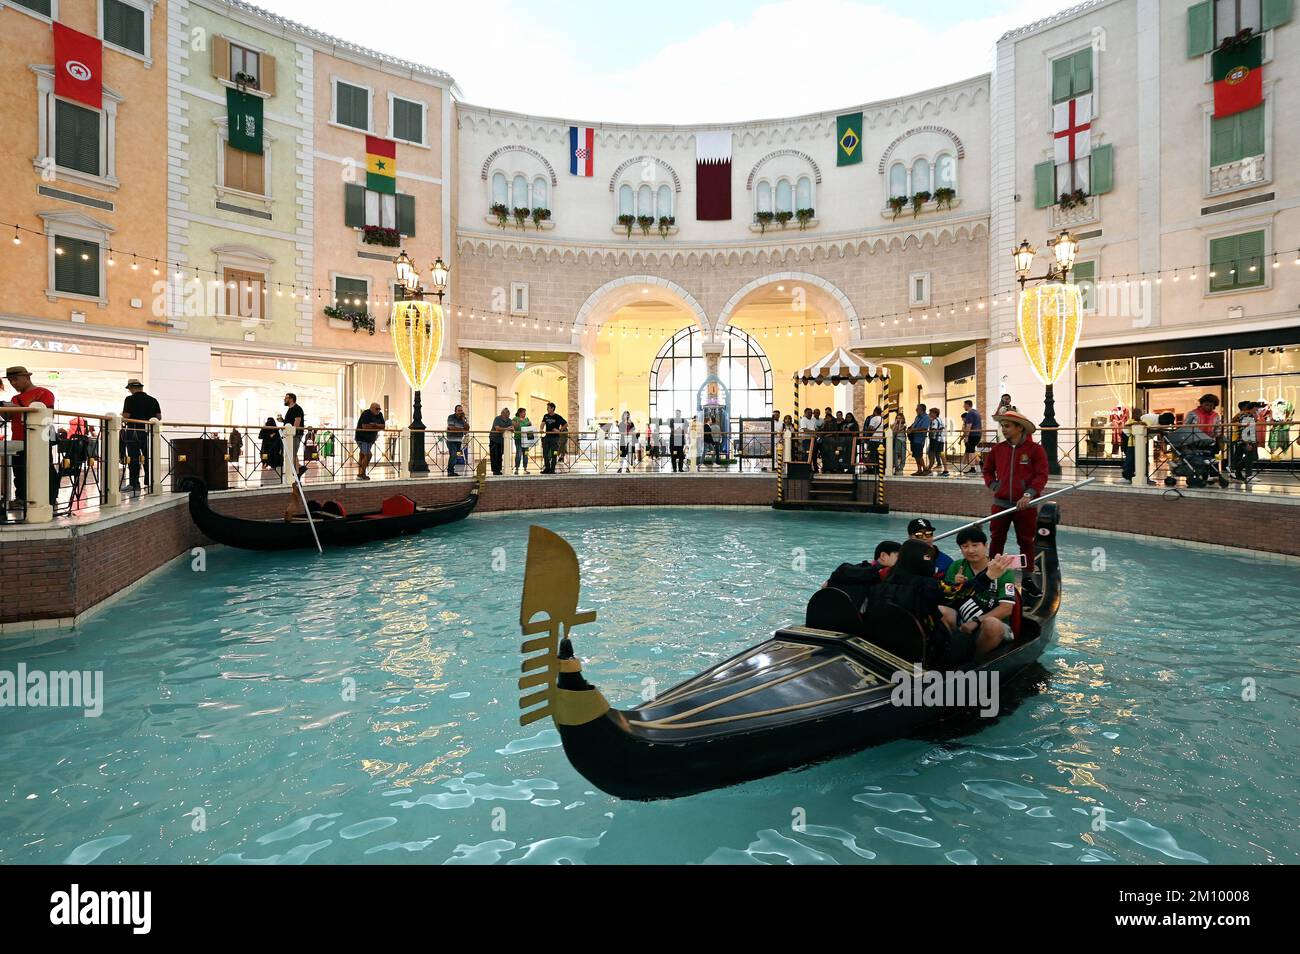 Football World Cup, Qatar 2022, Doha; Villaggio Mall, Venetian style  shopping mall with canal, gondolas and artificial sky Stock Photo - Alamy